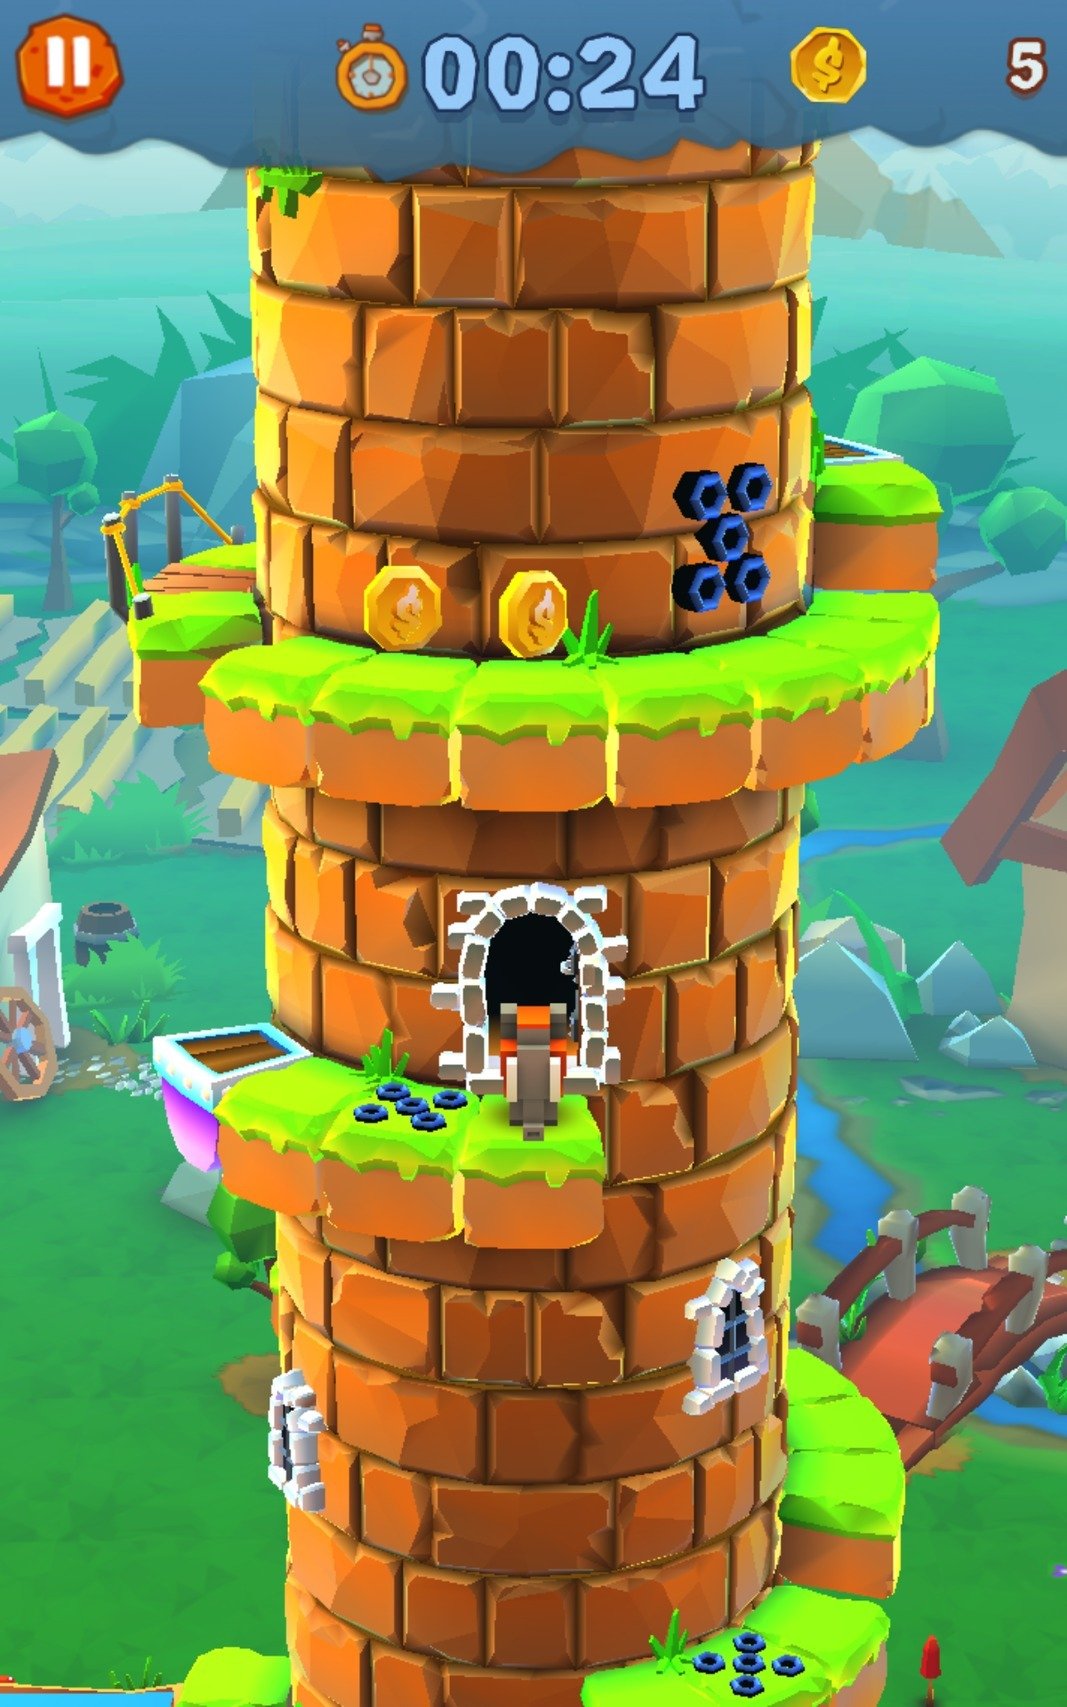 Blocky Castle